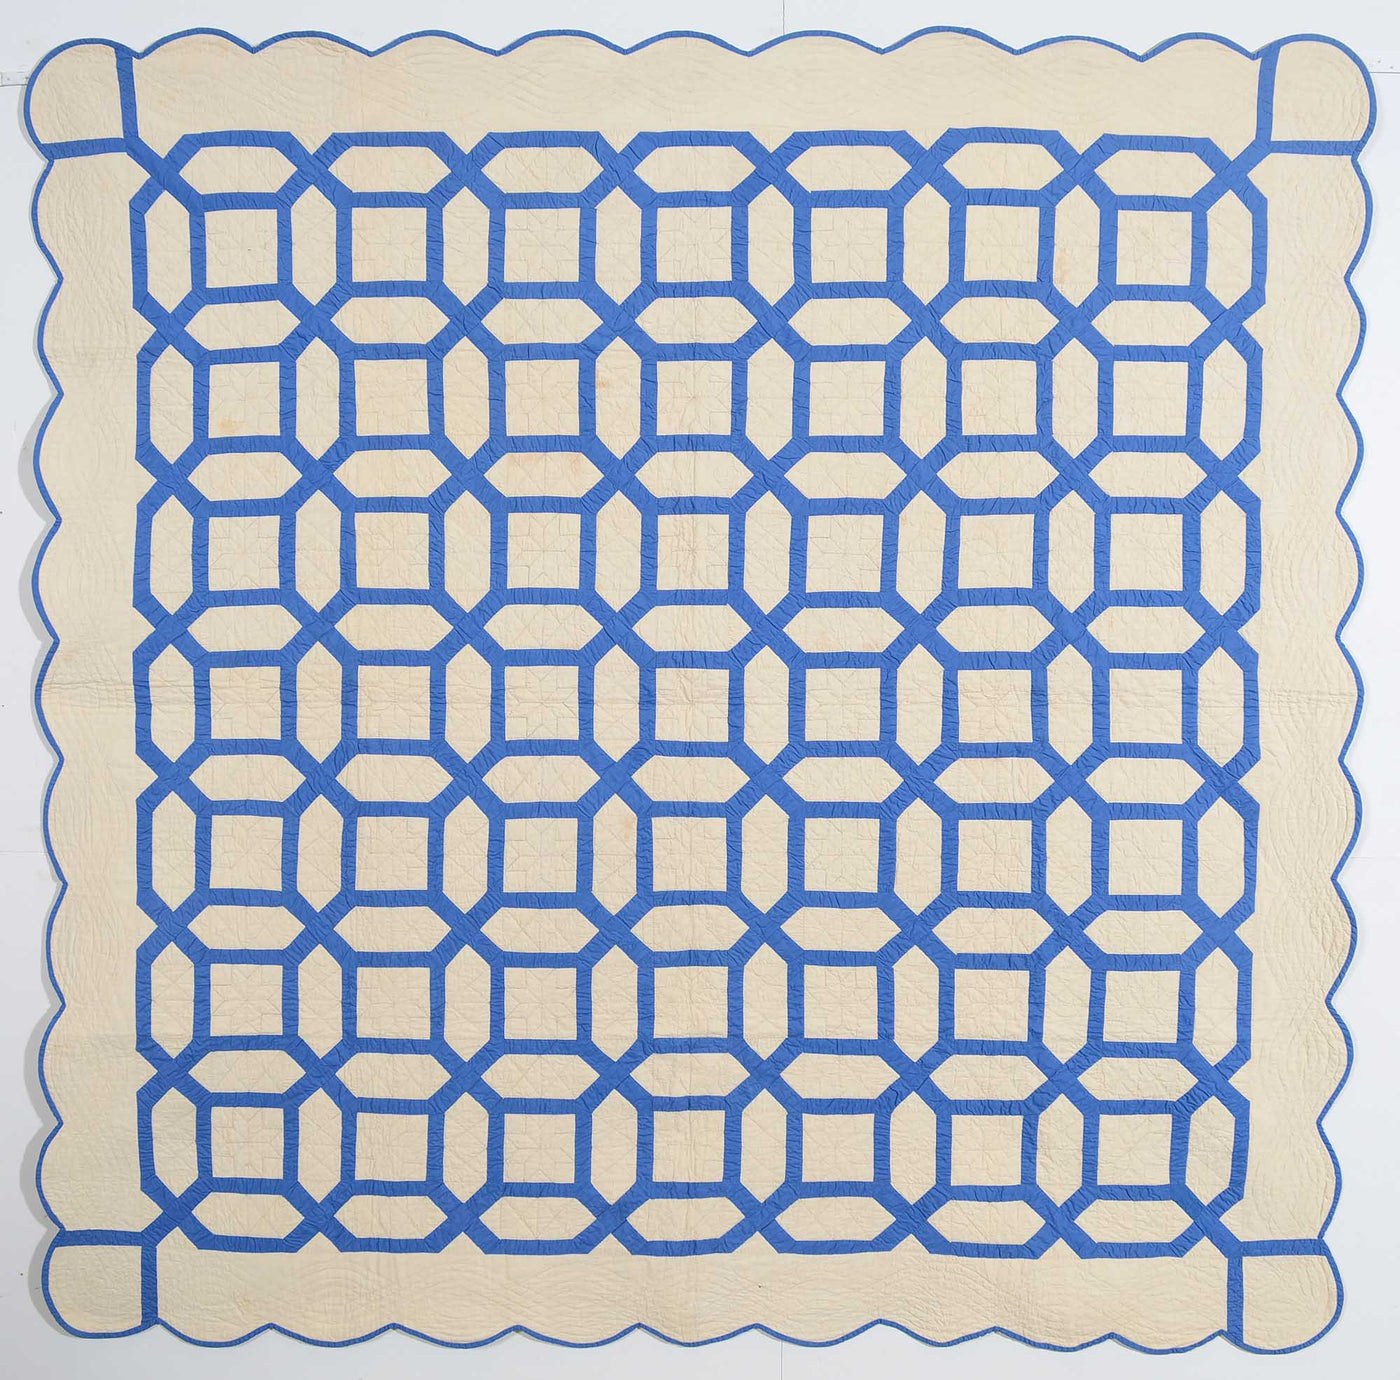 garden-maze-quilt-product-1353866